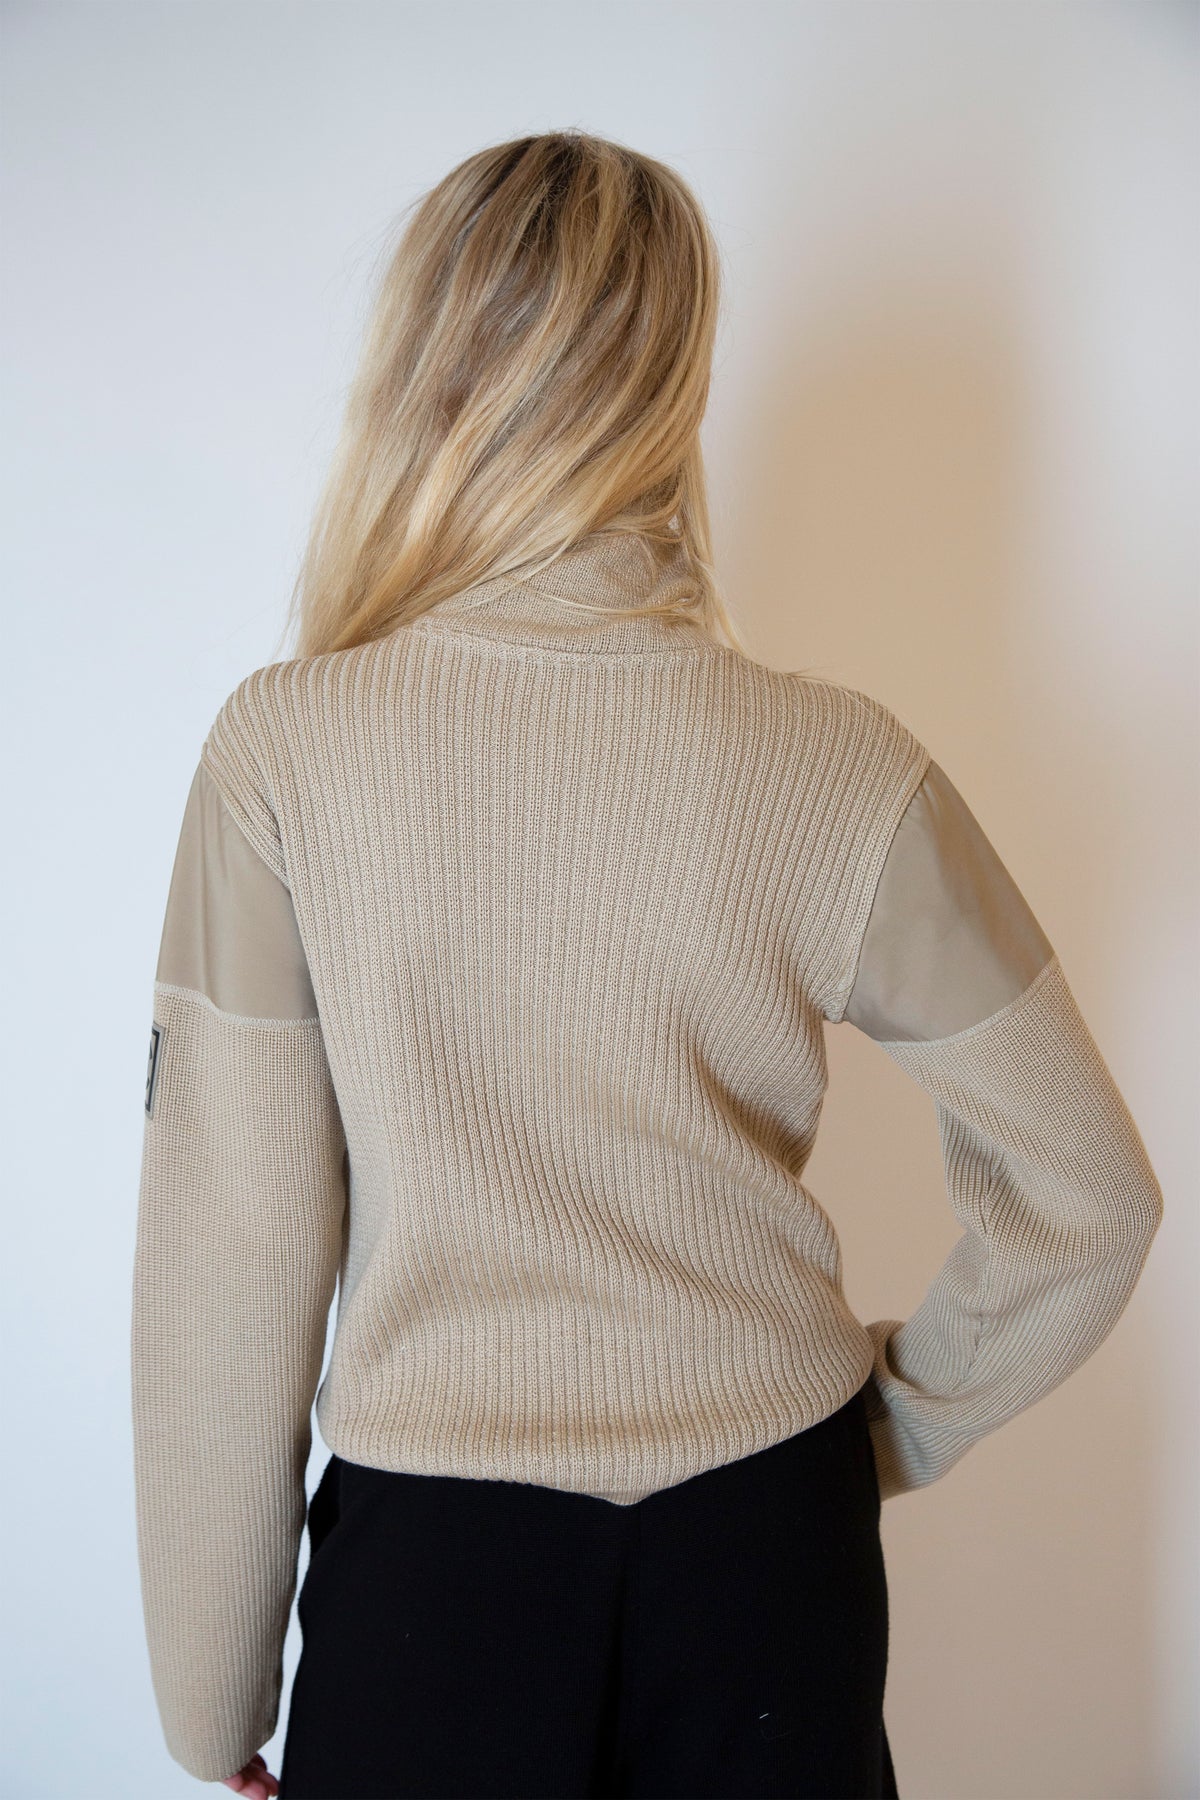 Chanel sweater / cardigan